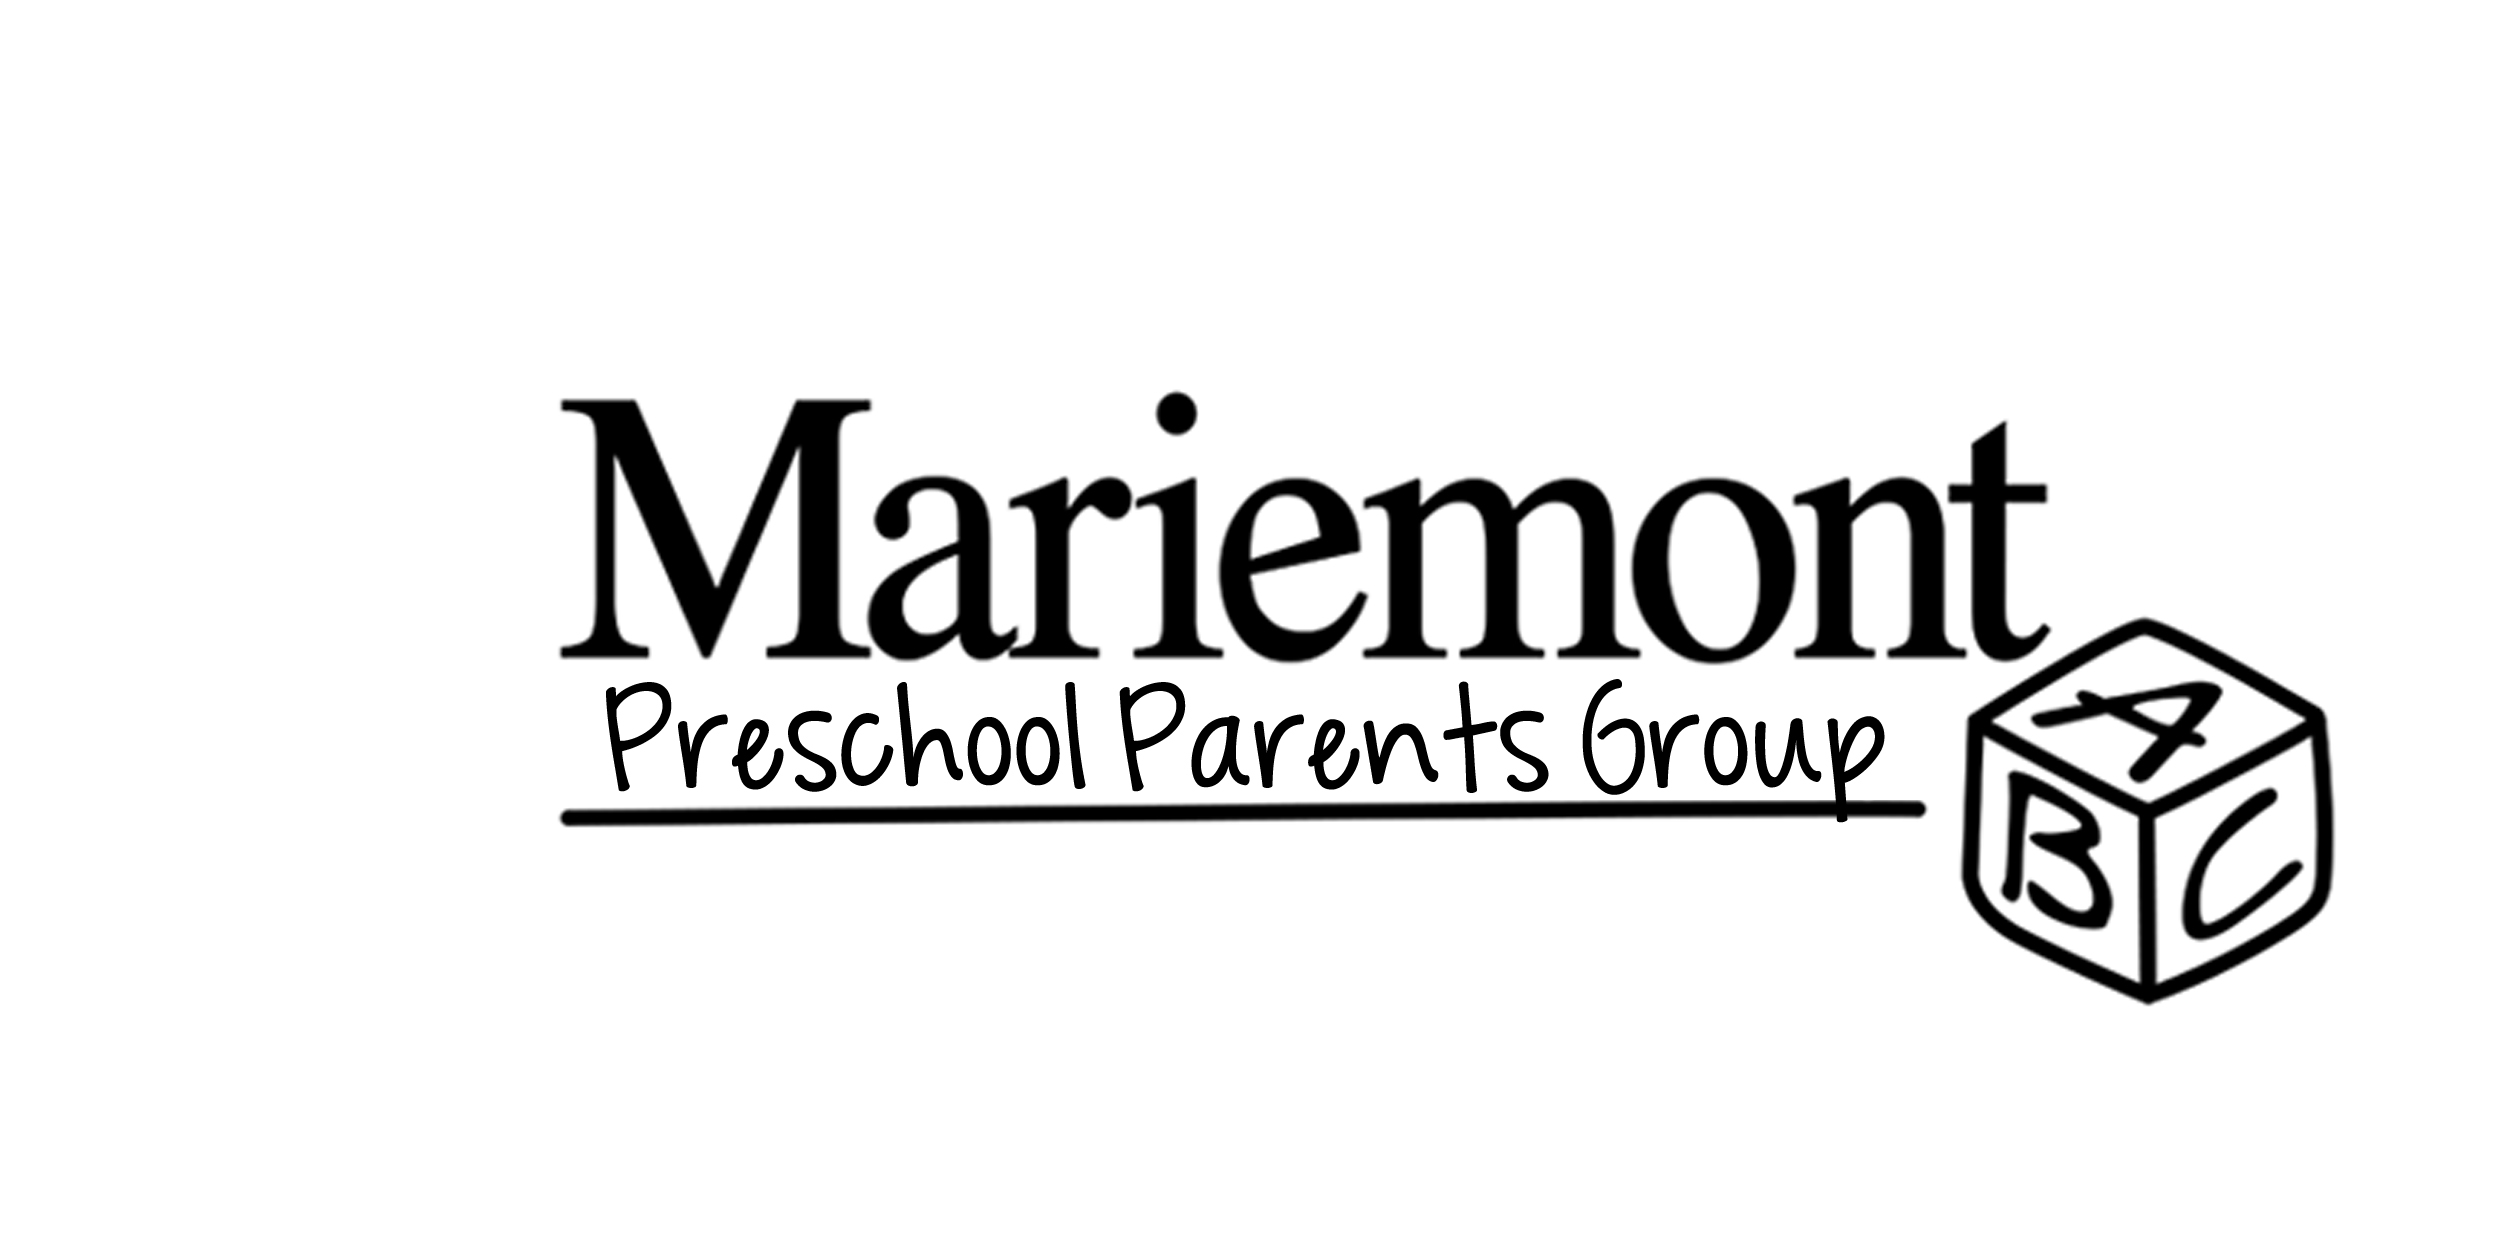 luminaria-mariemont-preschool-parents-group